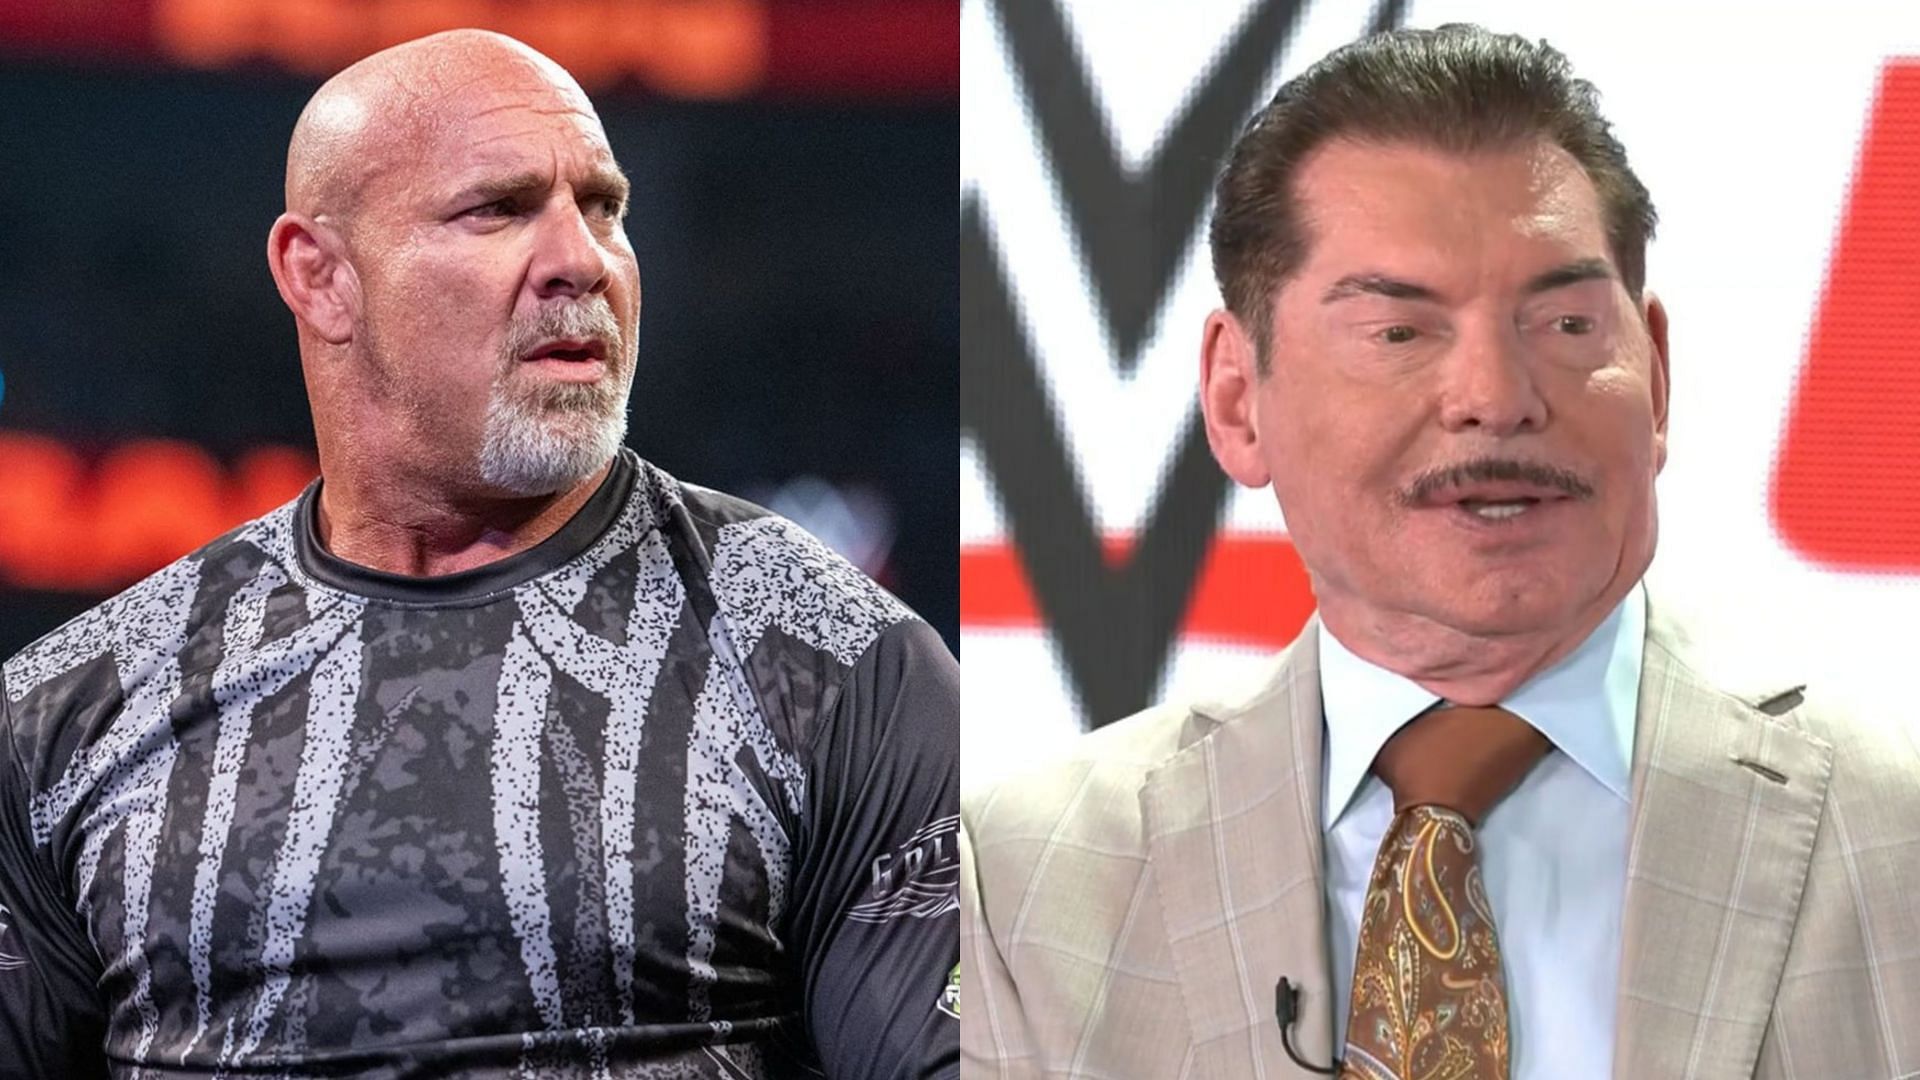 WWE Hall of Famer Goldberg (left) and WWE Executive Chairman Vince McMahon (right)